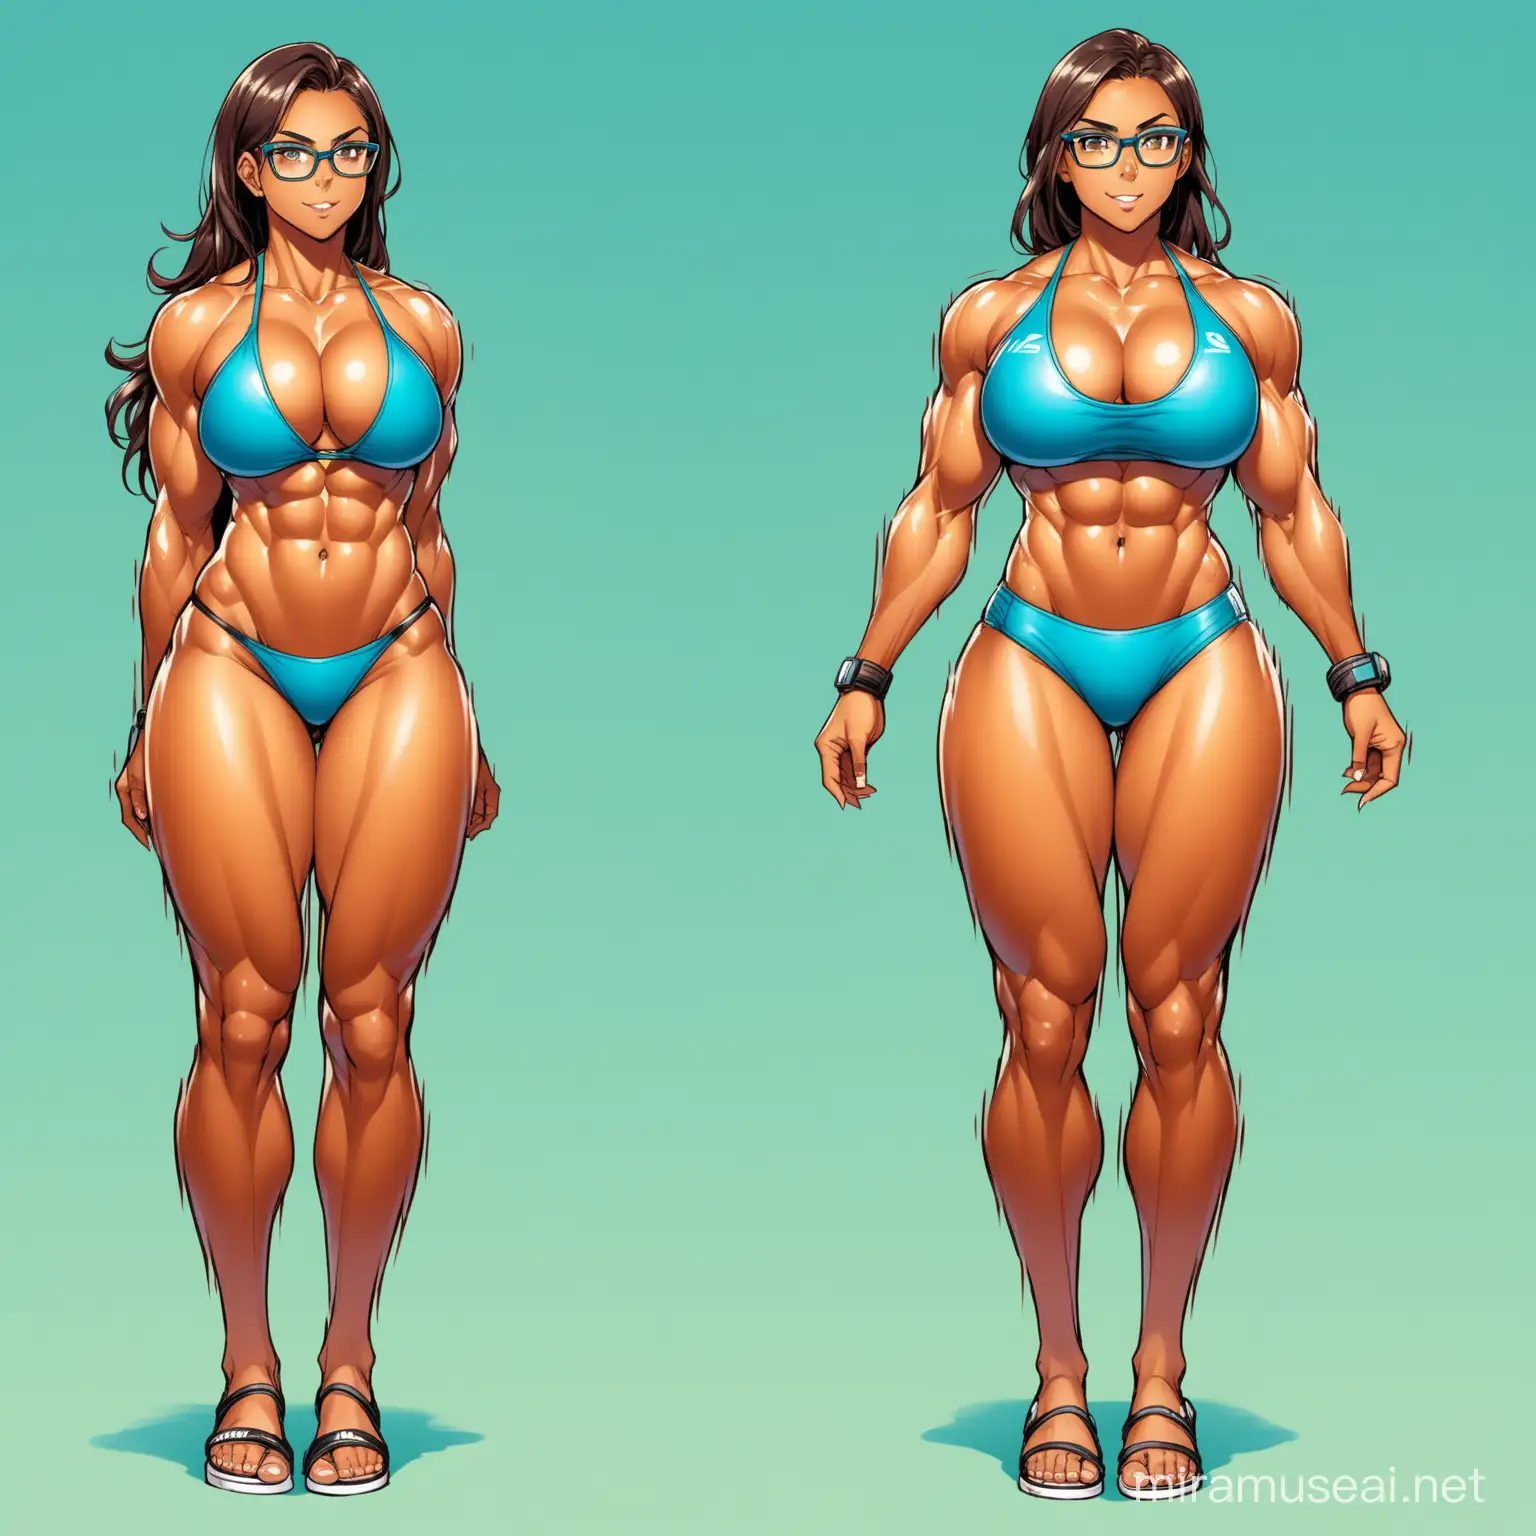 Female, glasses,athletic, muscular,full body tan,full body oil, large bust,bikini swim shorts